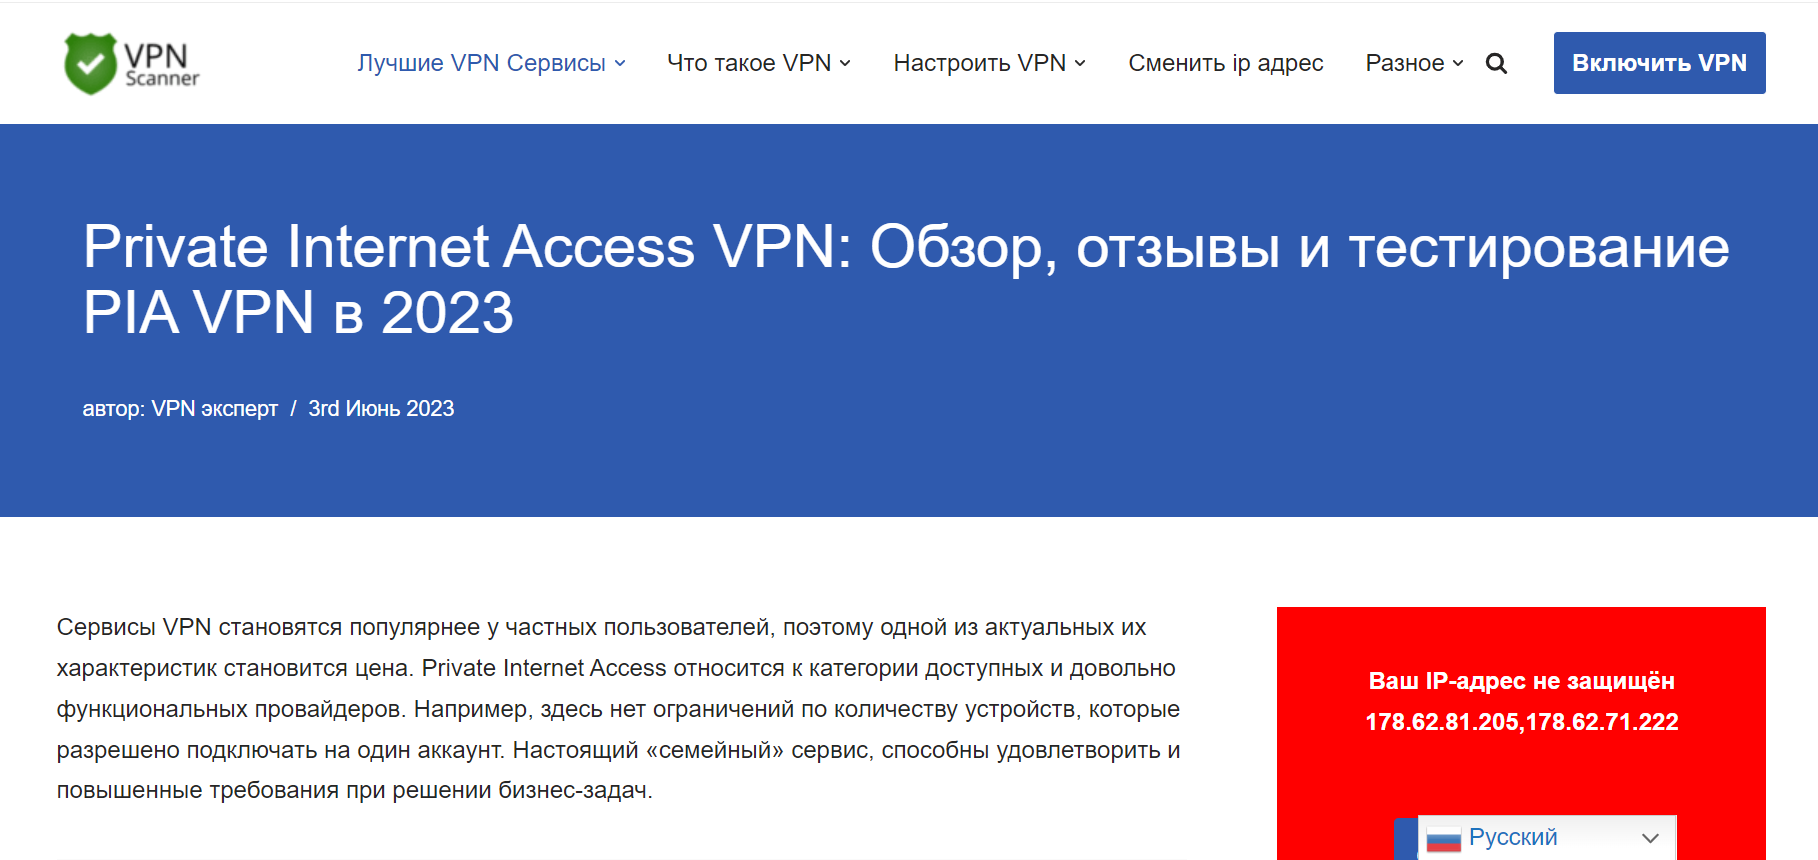 Private Internet Access VPN: Обзор, отзывы и тестирование PIA VPN в 2023 году